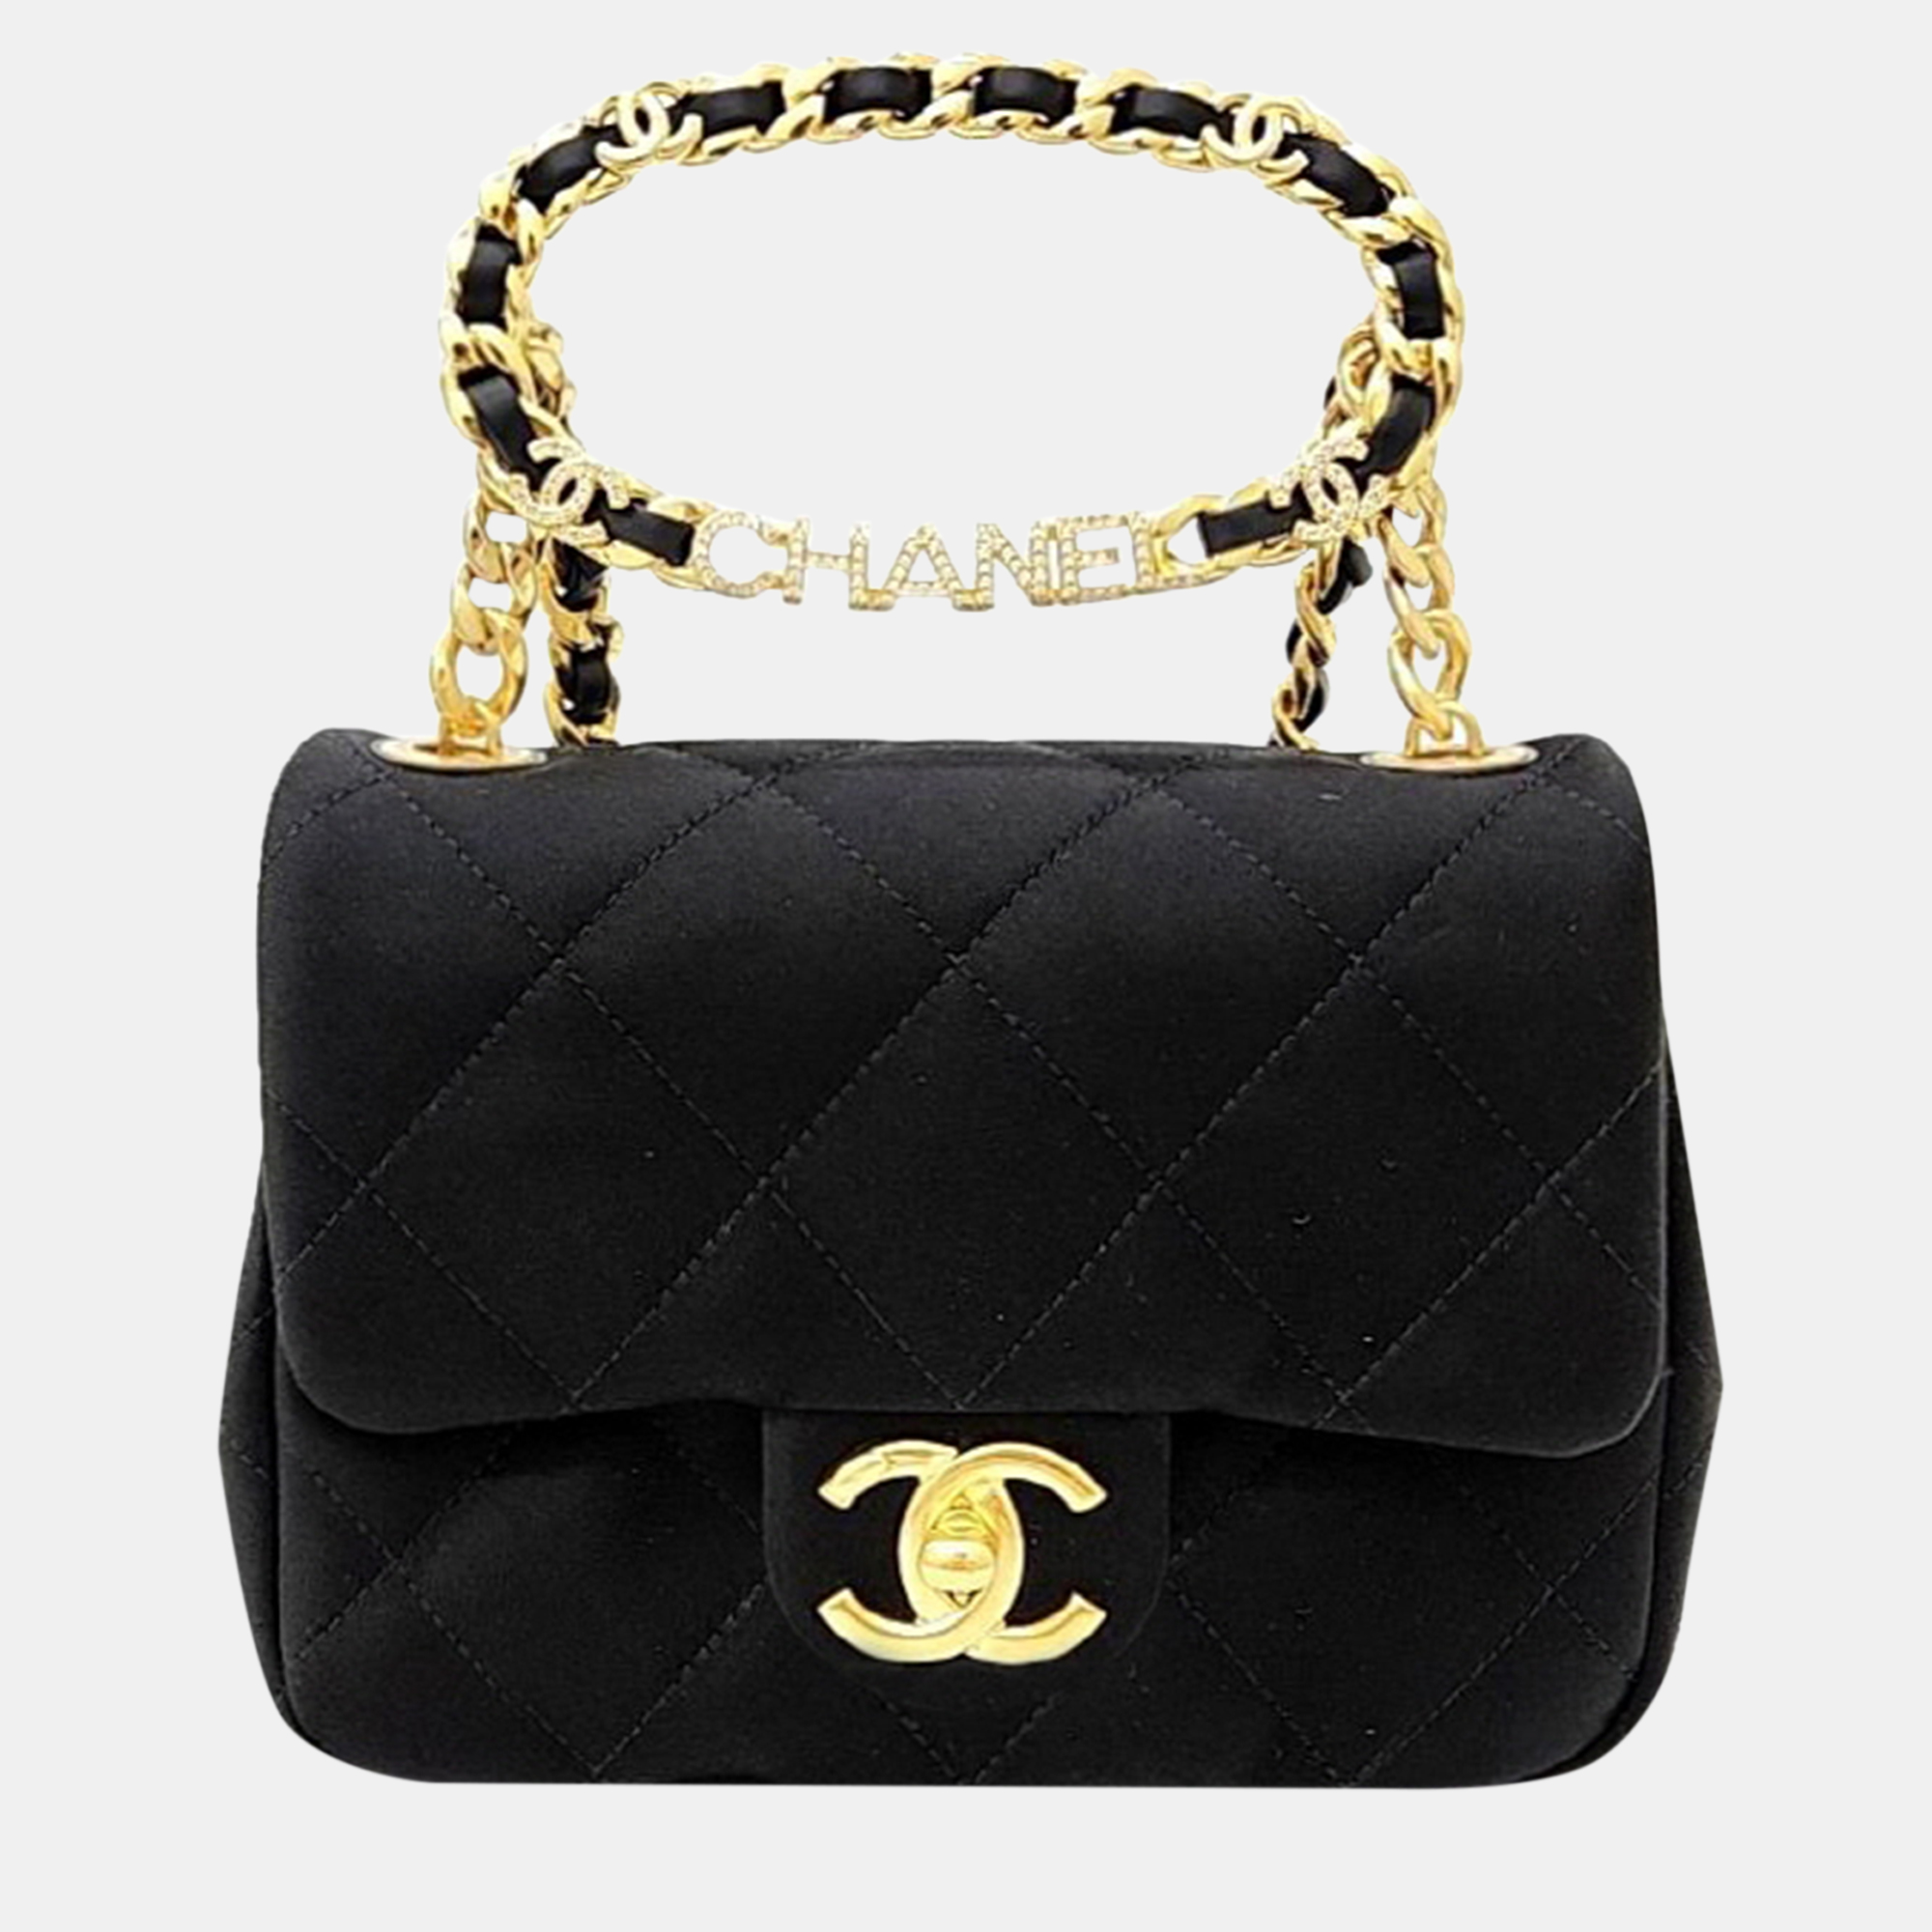 Chanel Black Leather Top Handle Mini Flap Bag